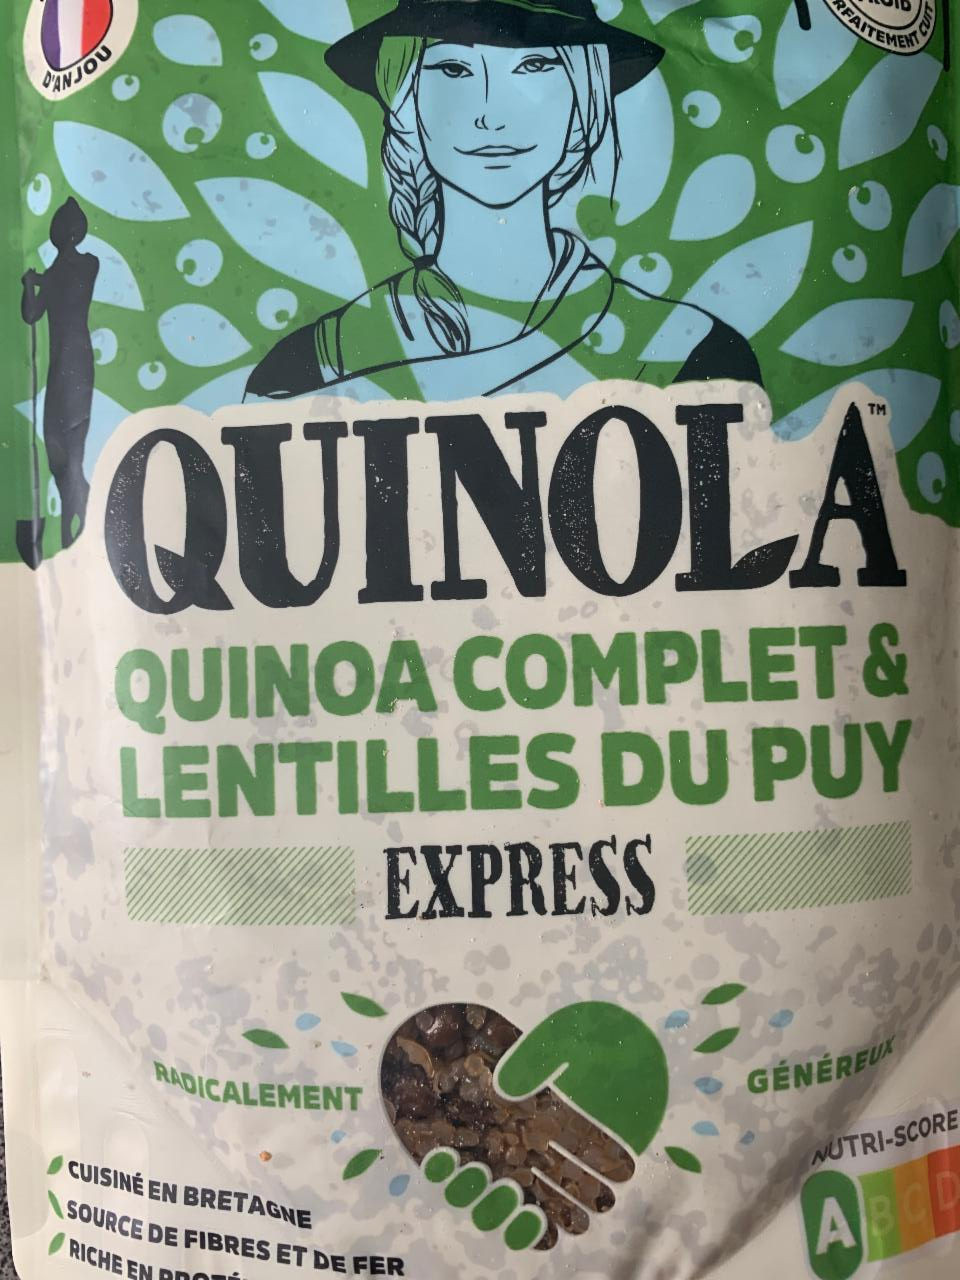 Fotografie - Quinoa Complet & Lentilles du puy Quinola